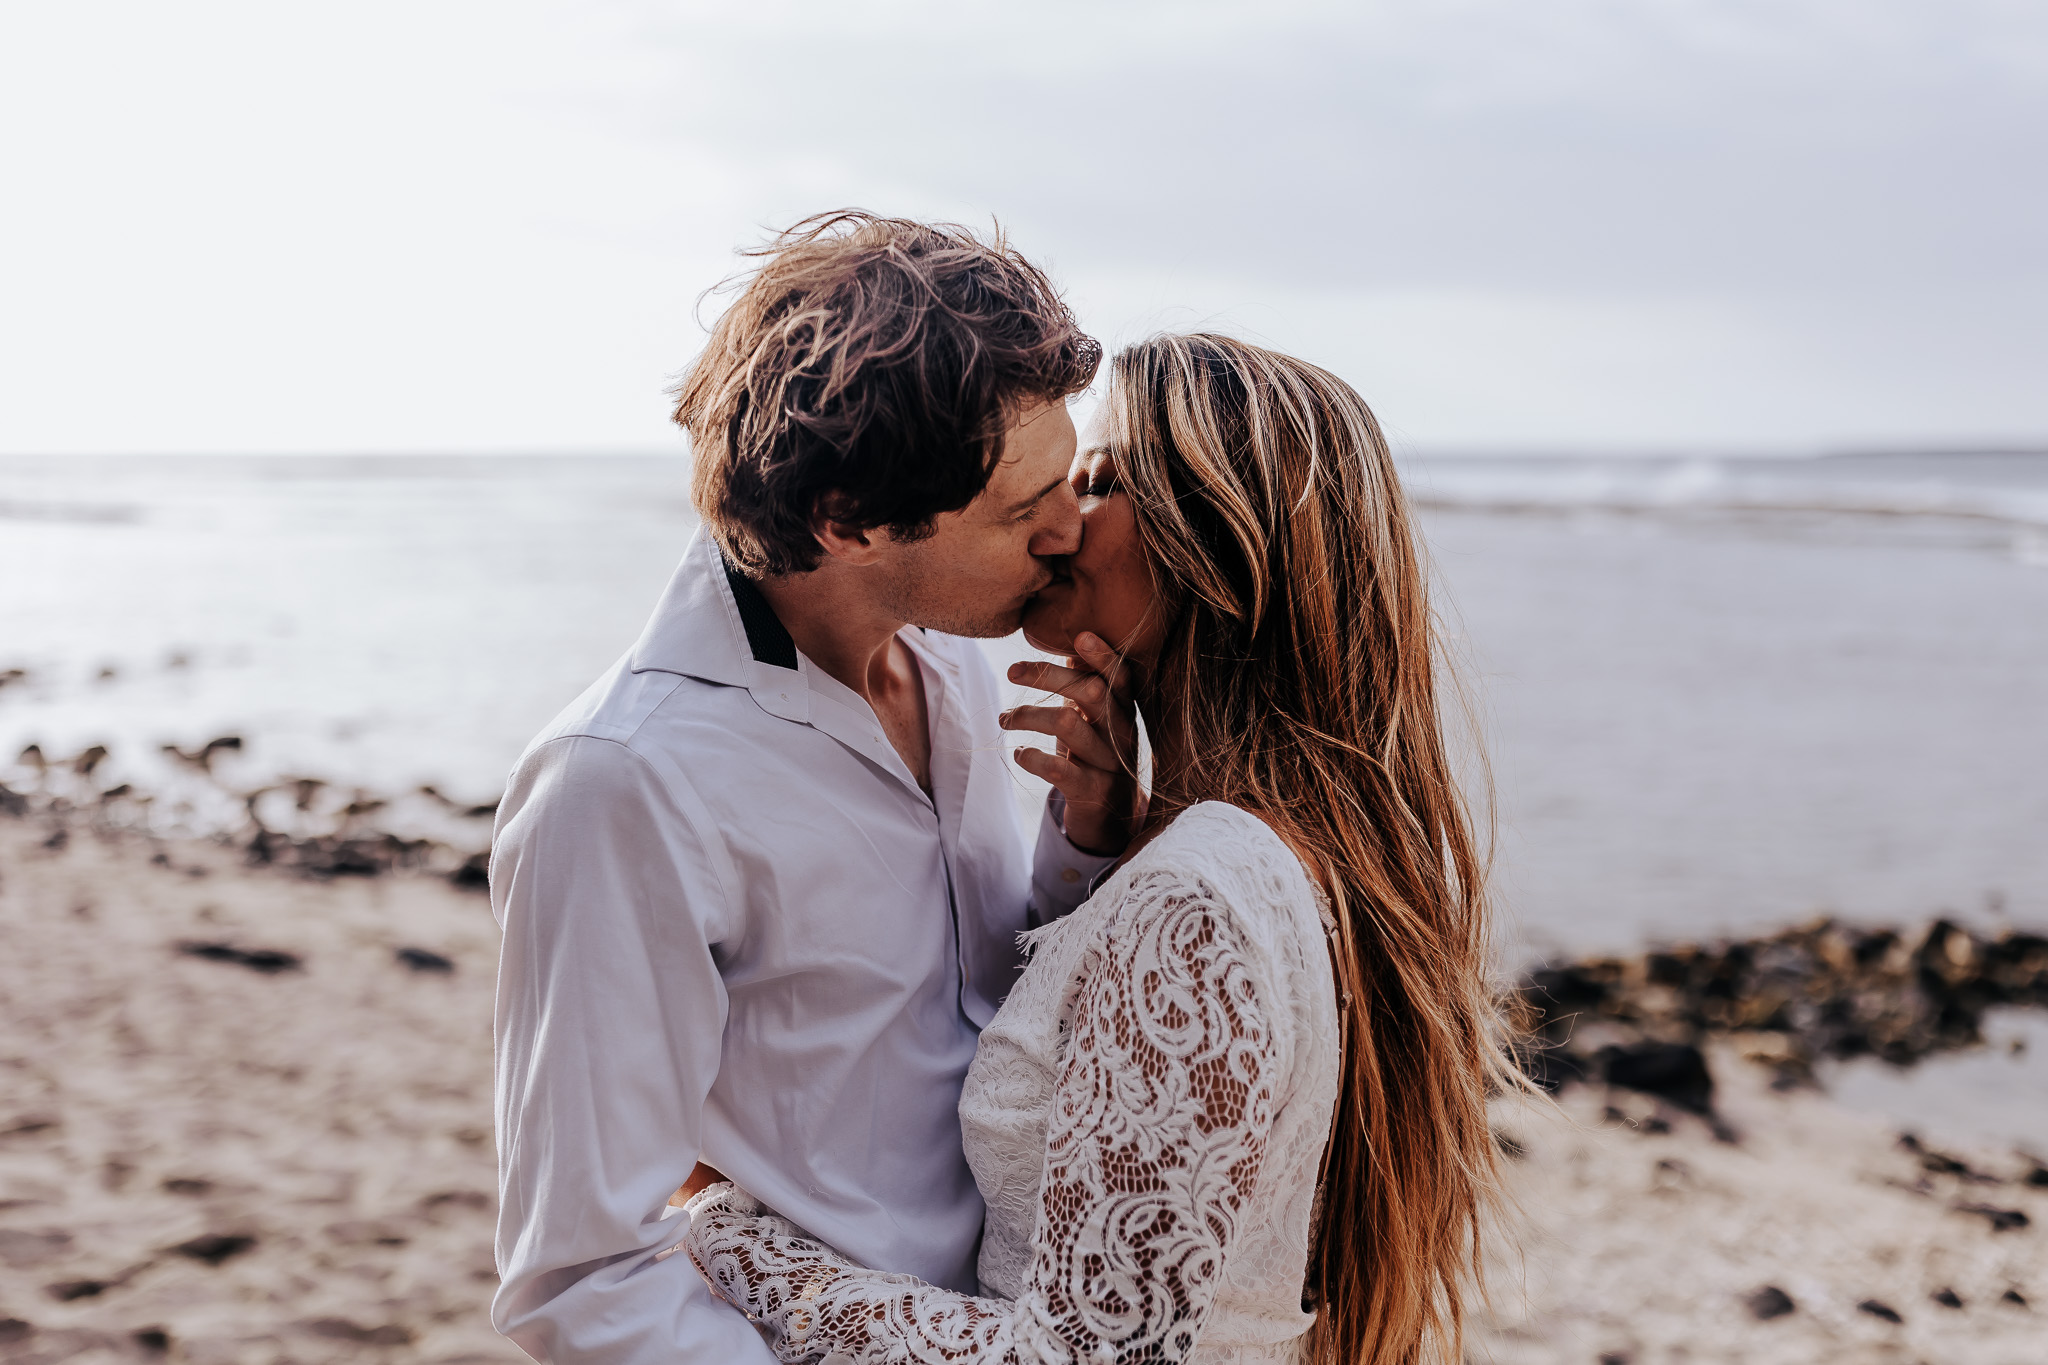 Destination elopement photographer captures bride and groom kissing during Hawaii elopement